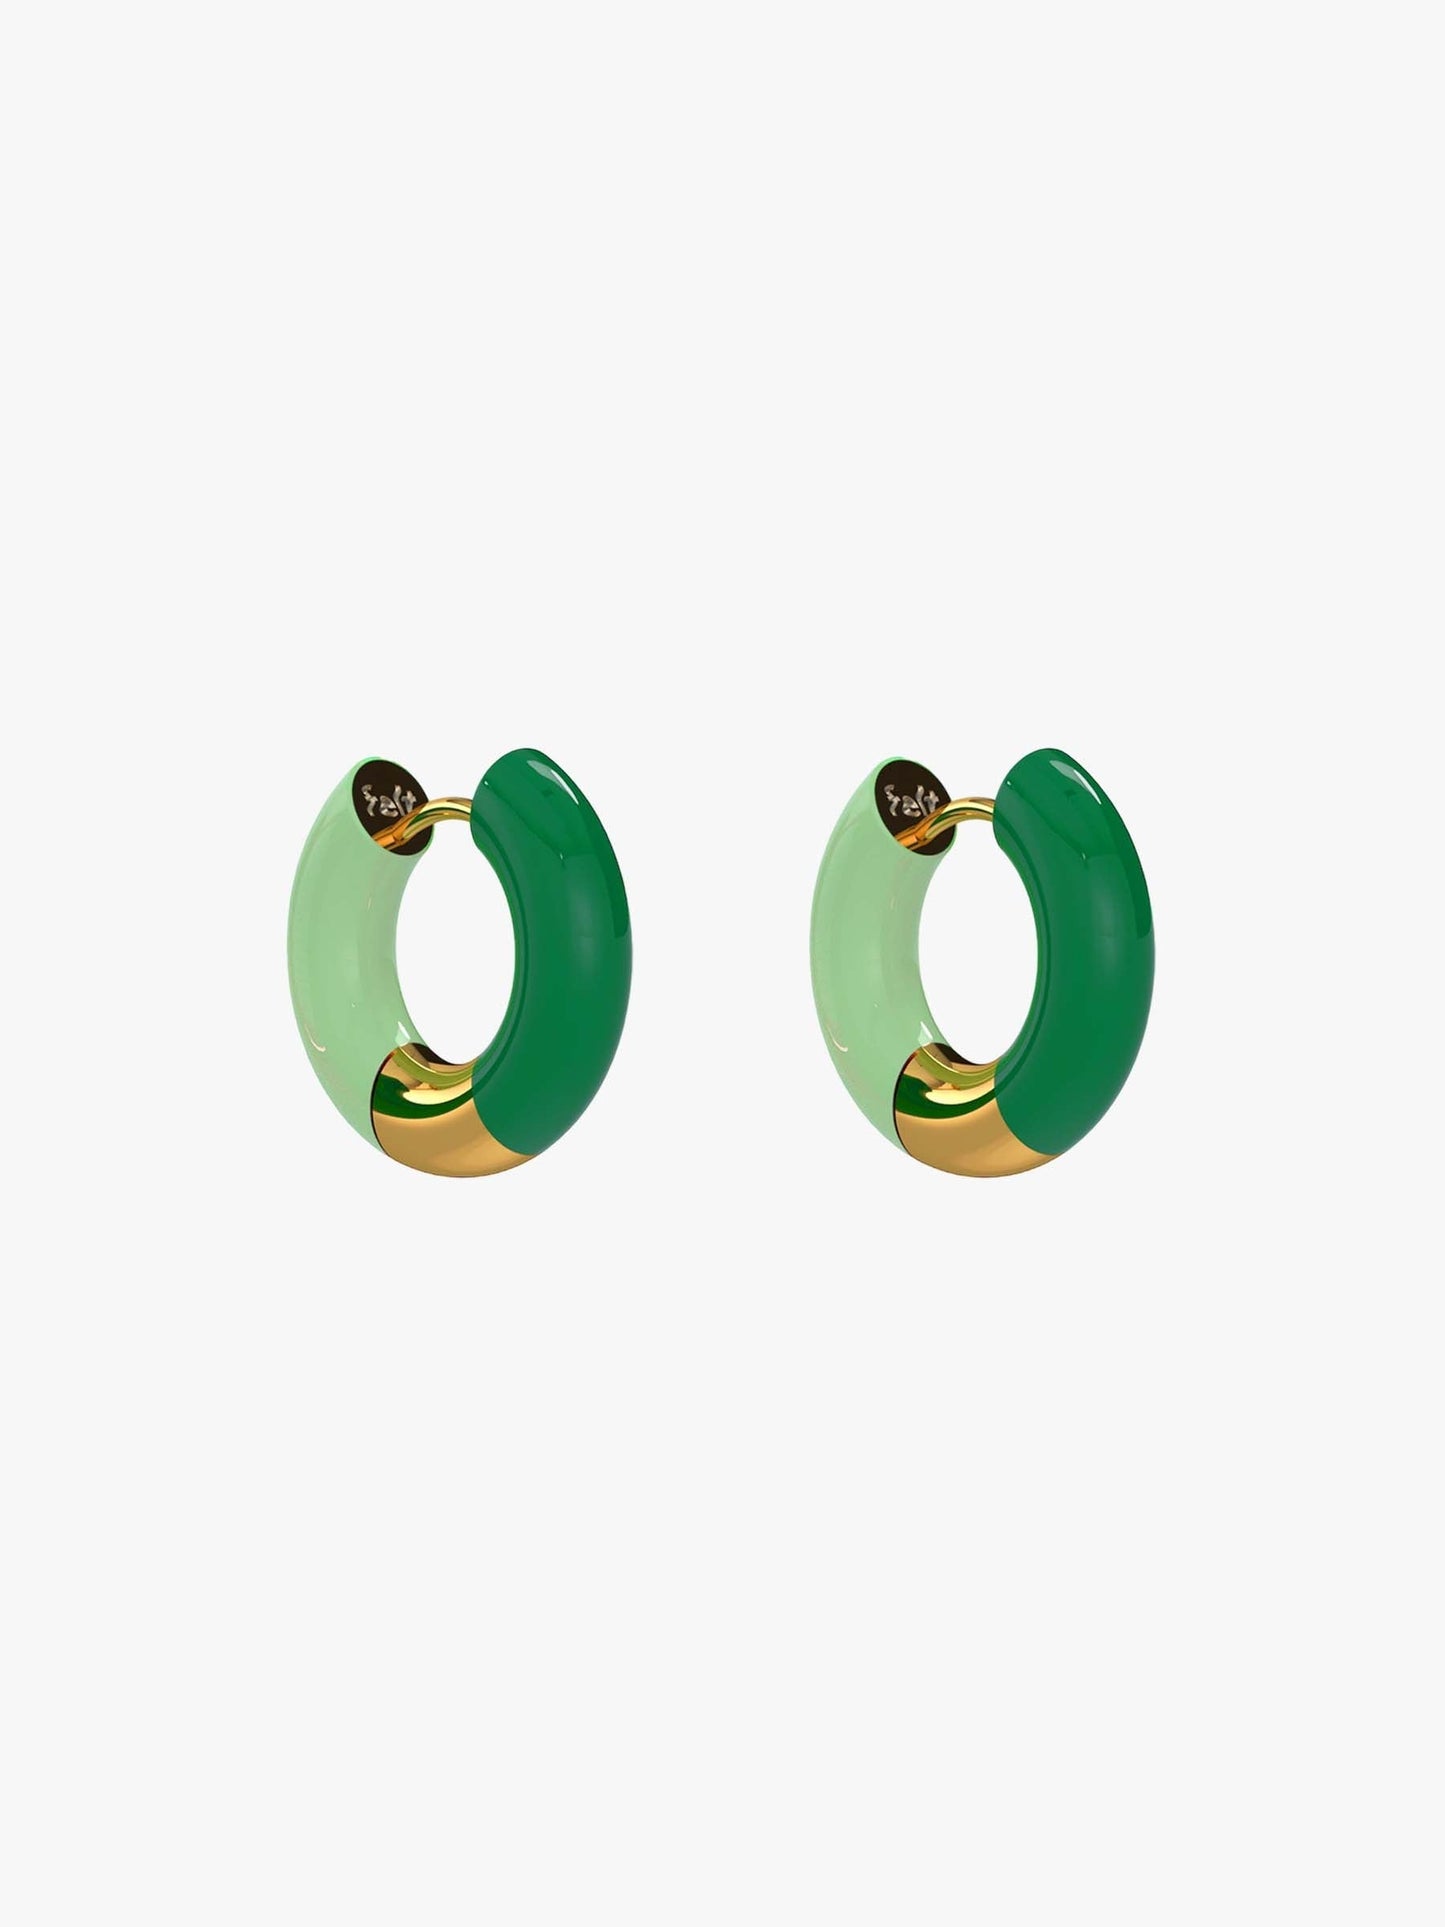 Ora Pio green earring (pair)